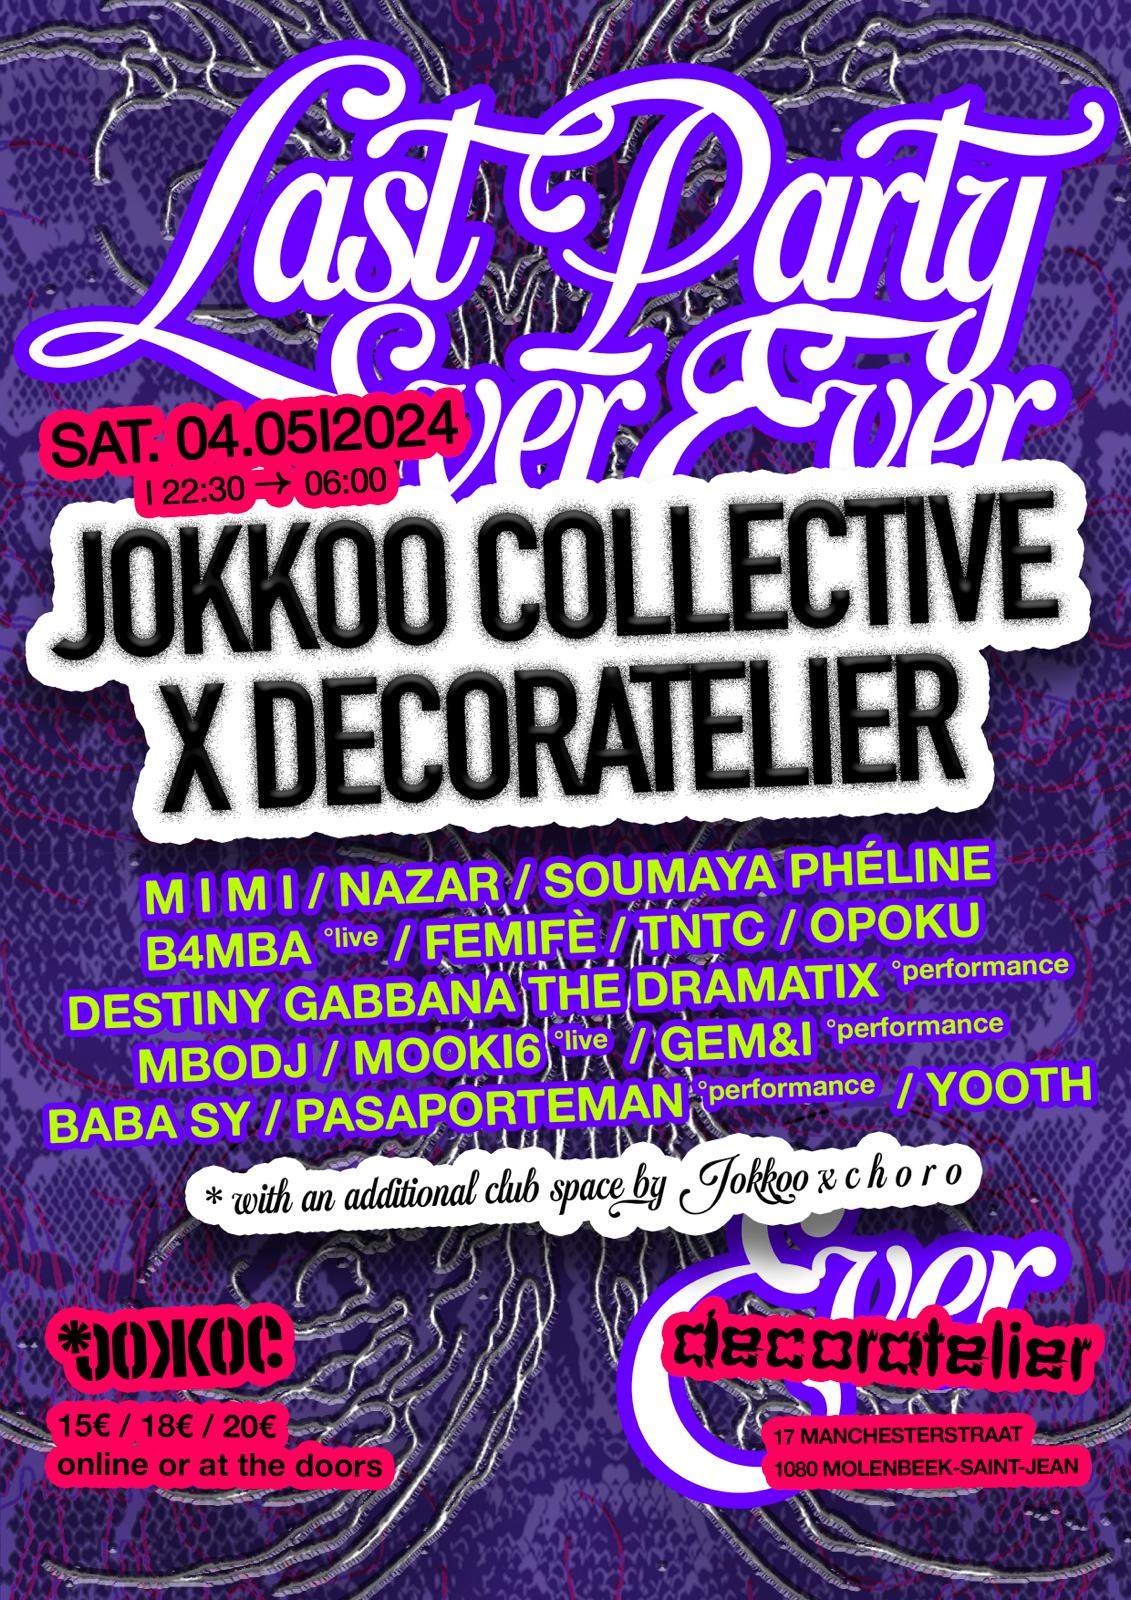 Decoratelier closing party x Jokkoo Collective - フライヤー表